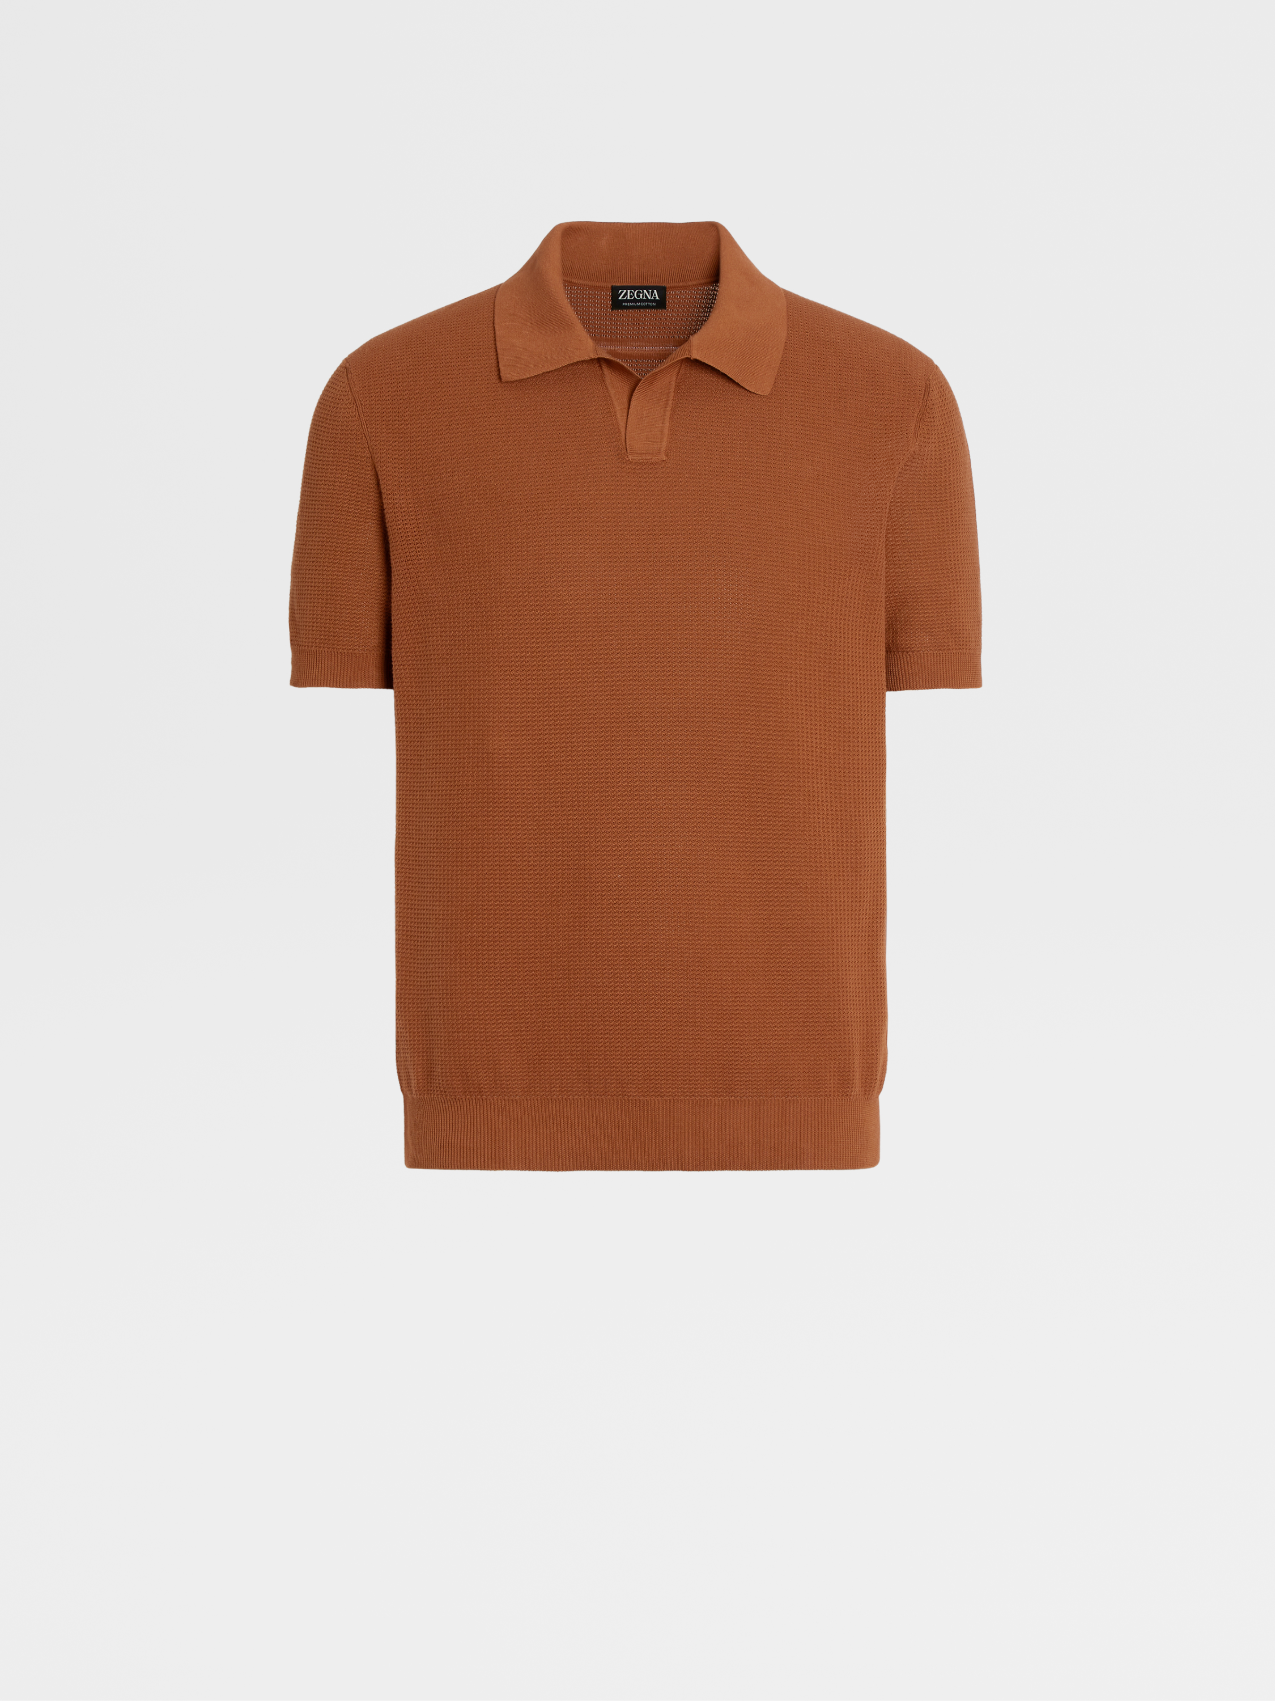 Foliage 色 Premium Cotton Polo 衫